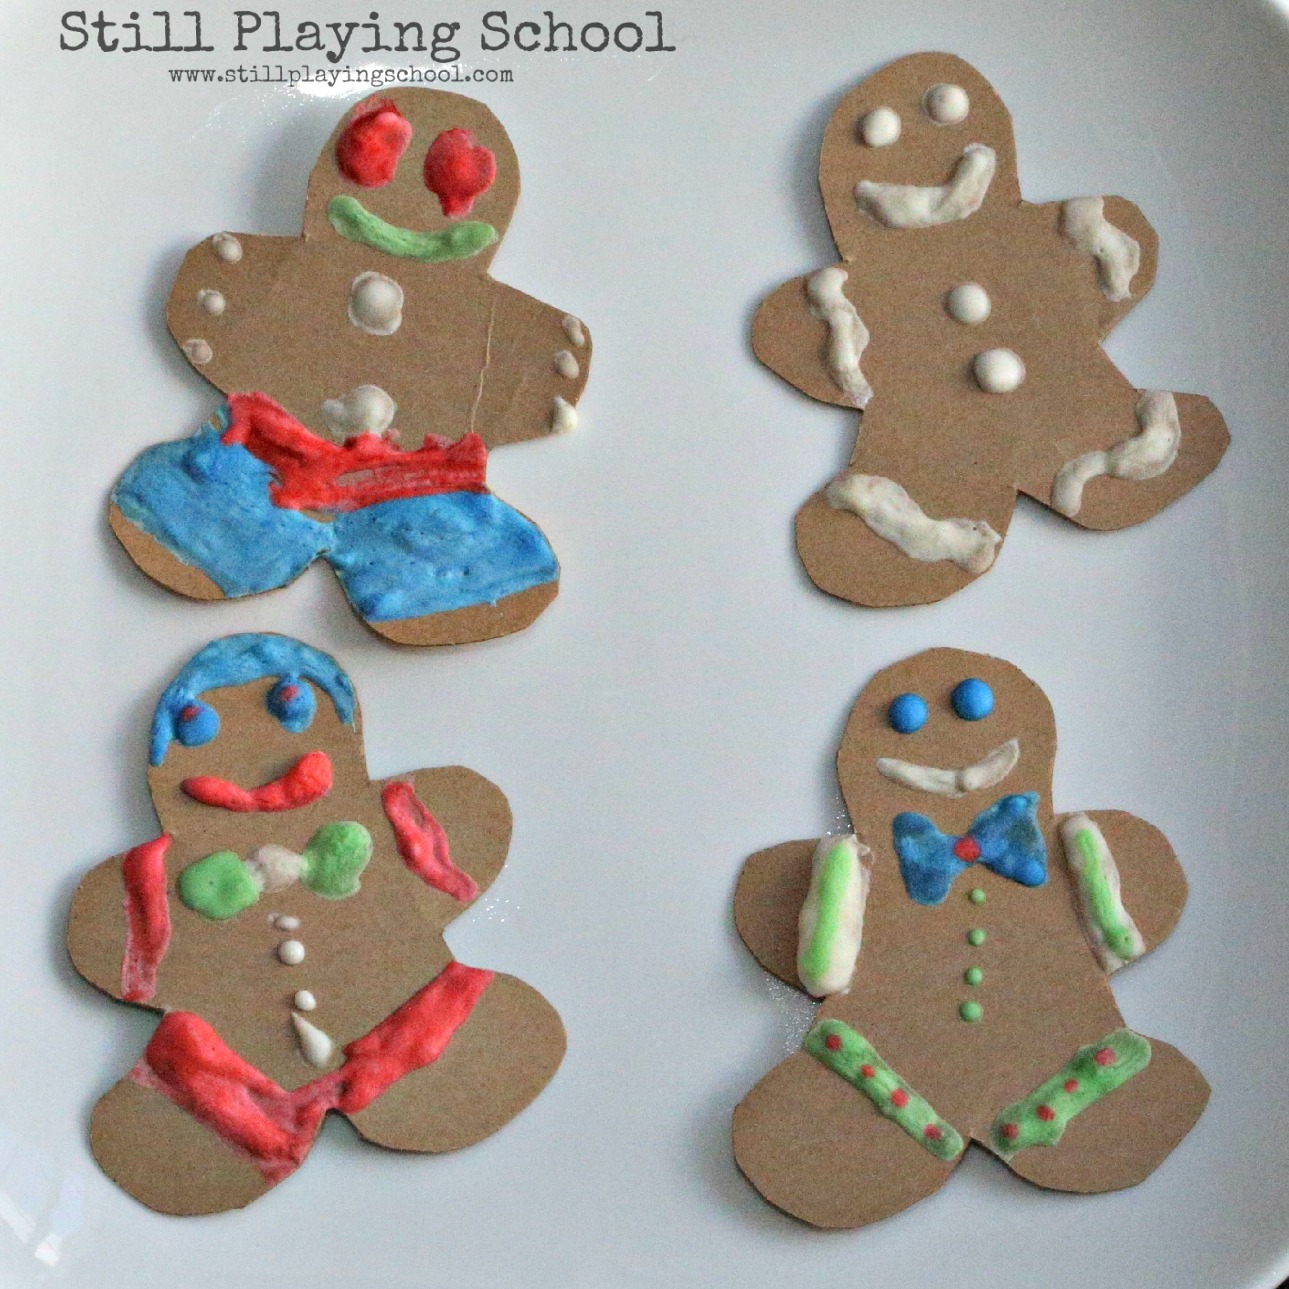 https://1.bp.blogspot.com/-_Se-YFf28J4/VnDLQcrdhkI/AAAAAAAAQoA/pYiNMqbp99s/s1600/gingerbread-cookies-paint-kids.jpg